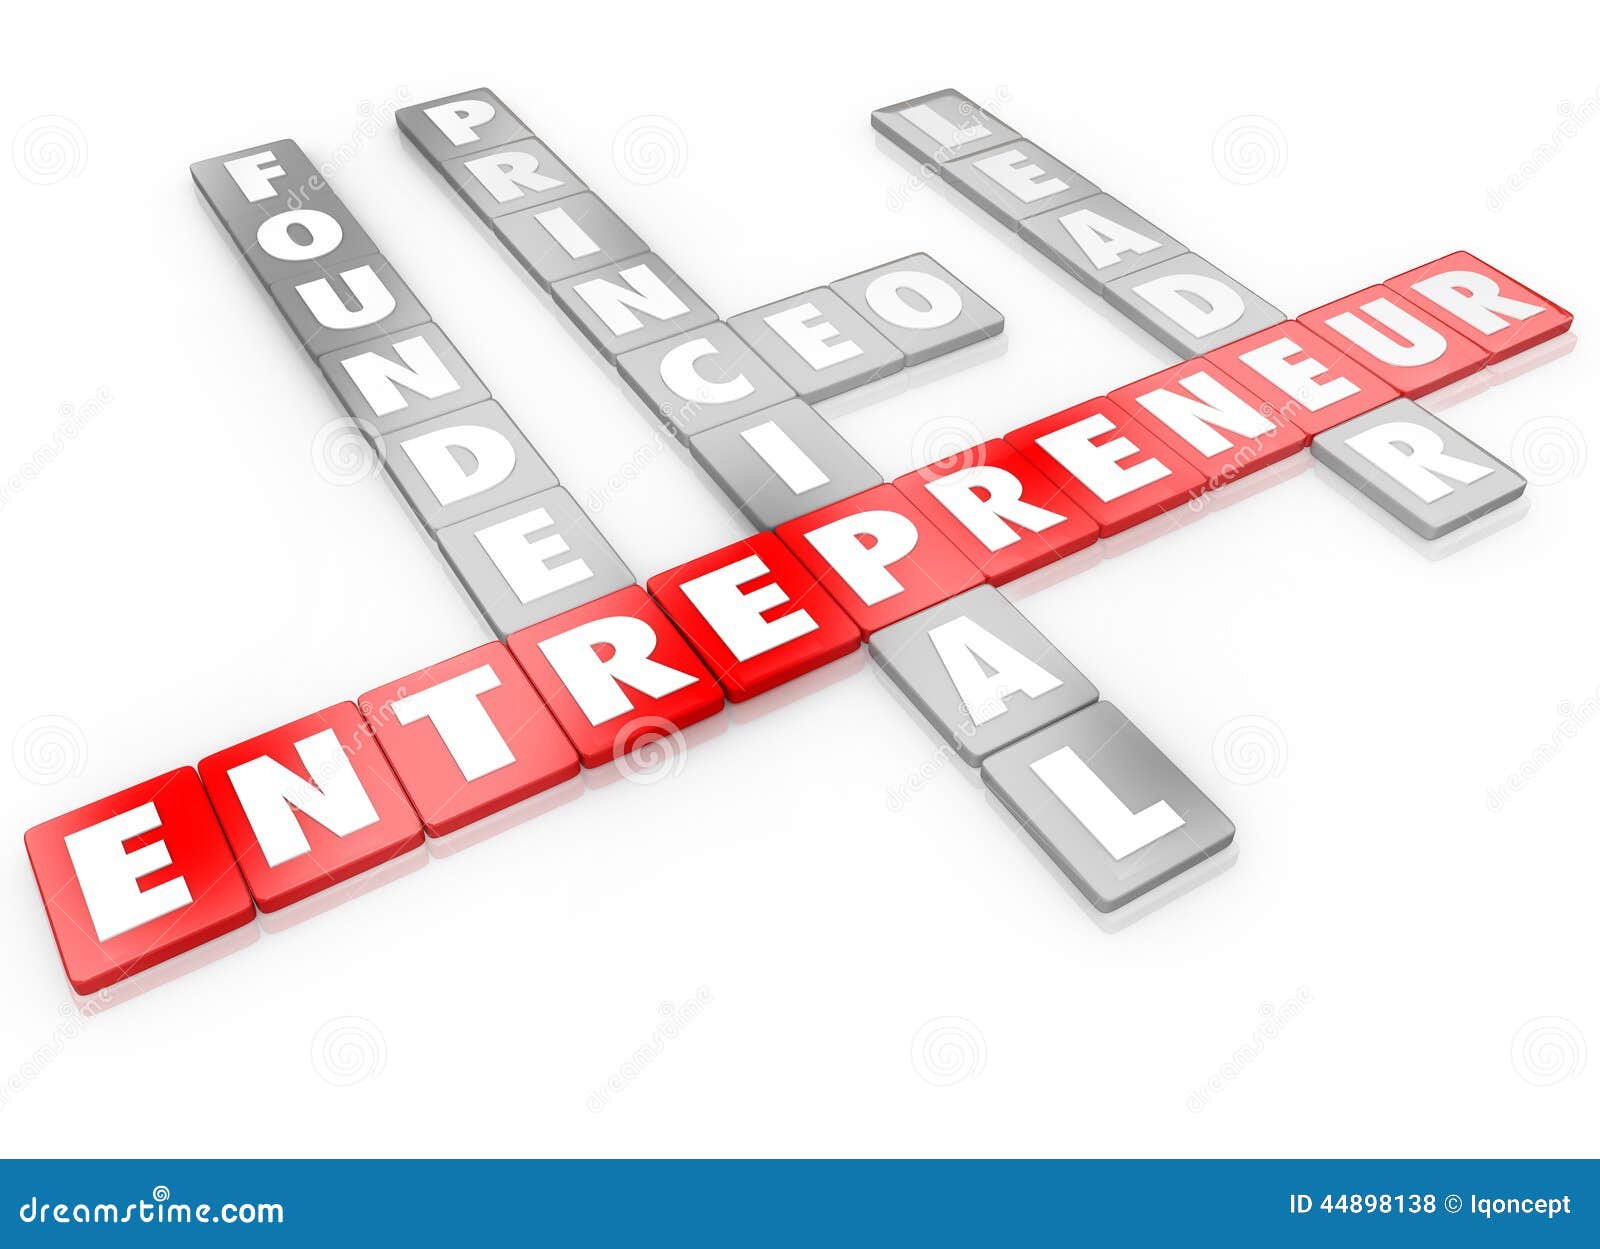 entrepreneur word letter tiles founder ceo business leader